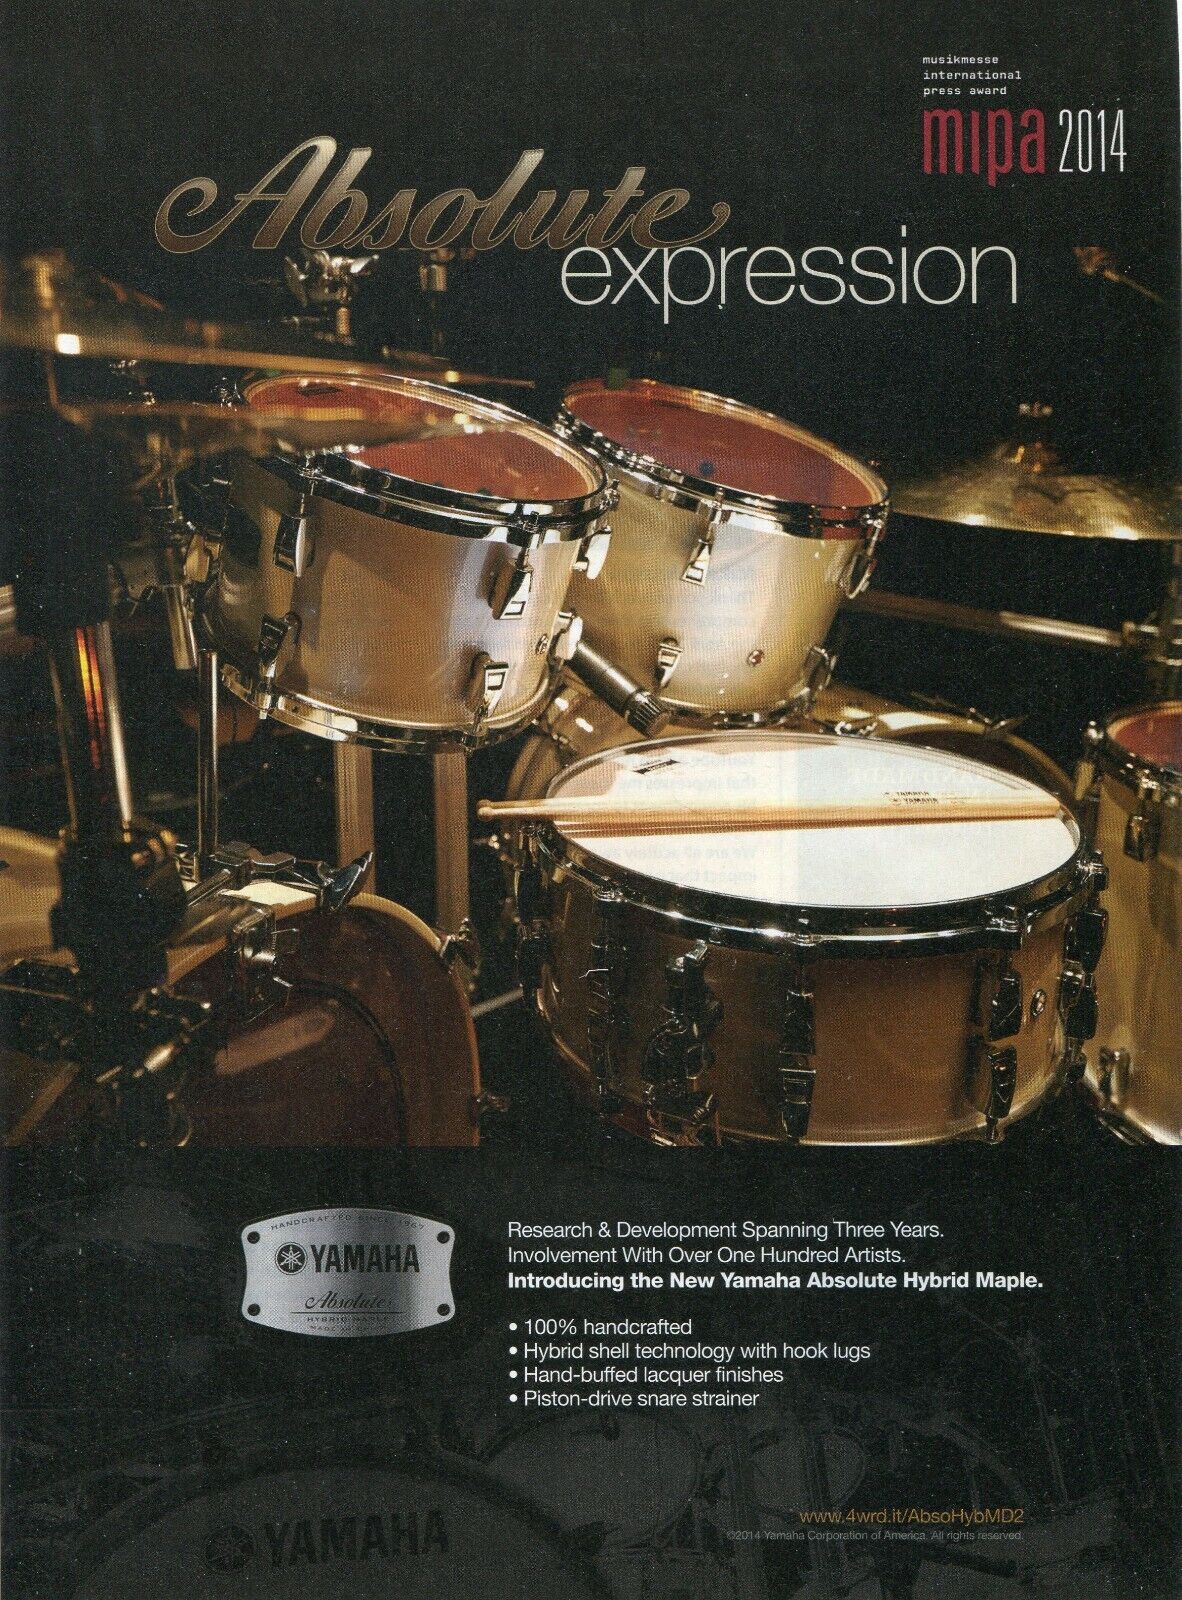 2014 Print Ad of Yamaha Absolute Hybrid Maple Drum Kit